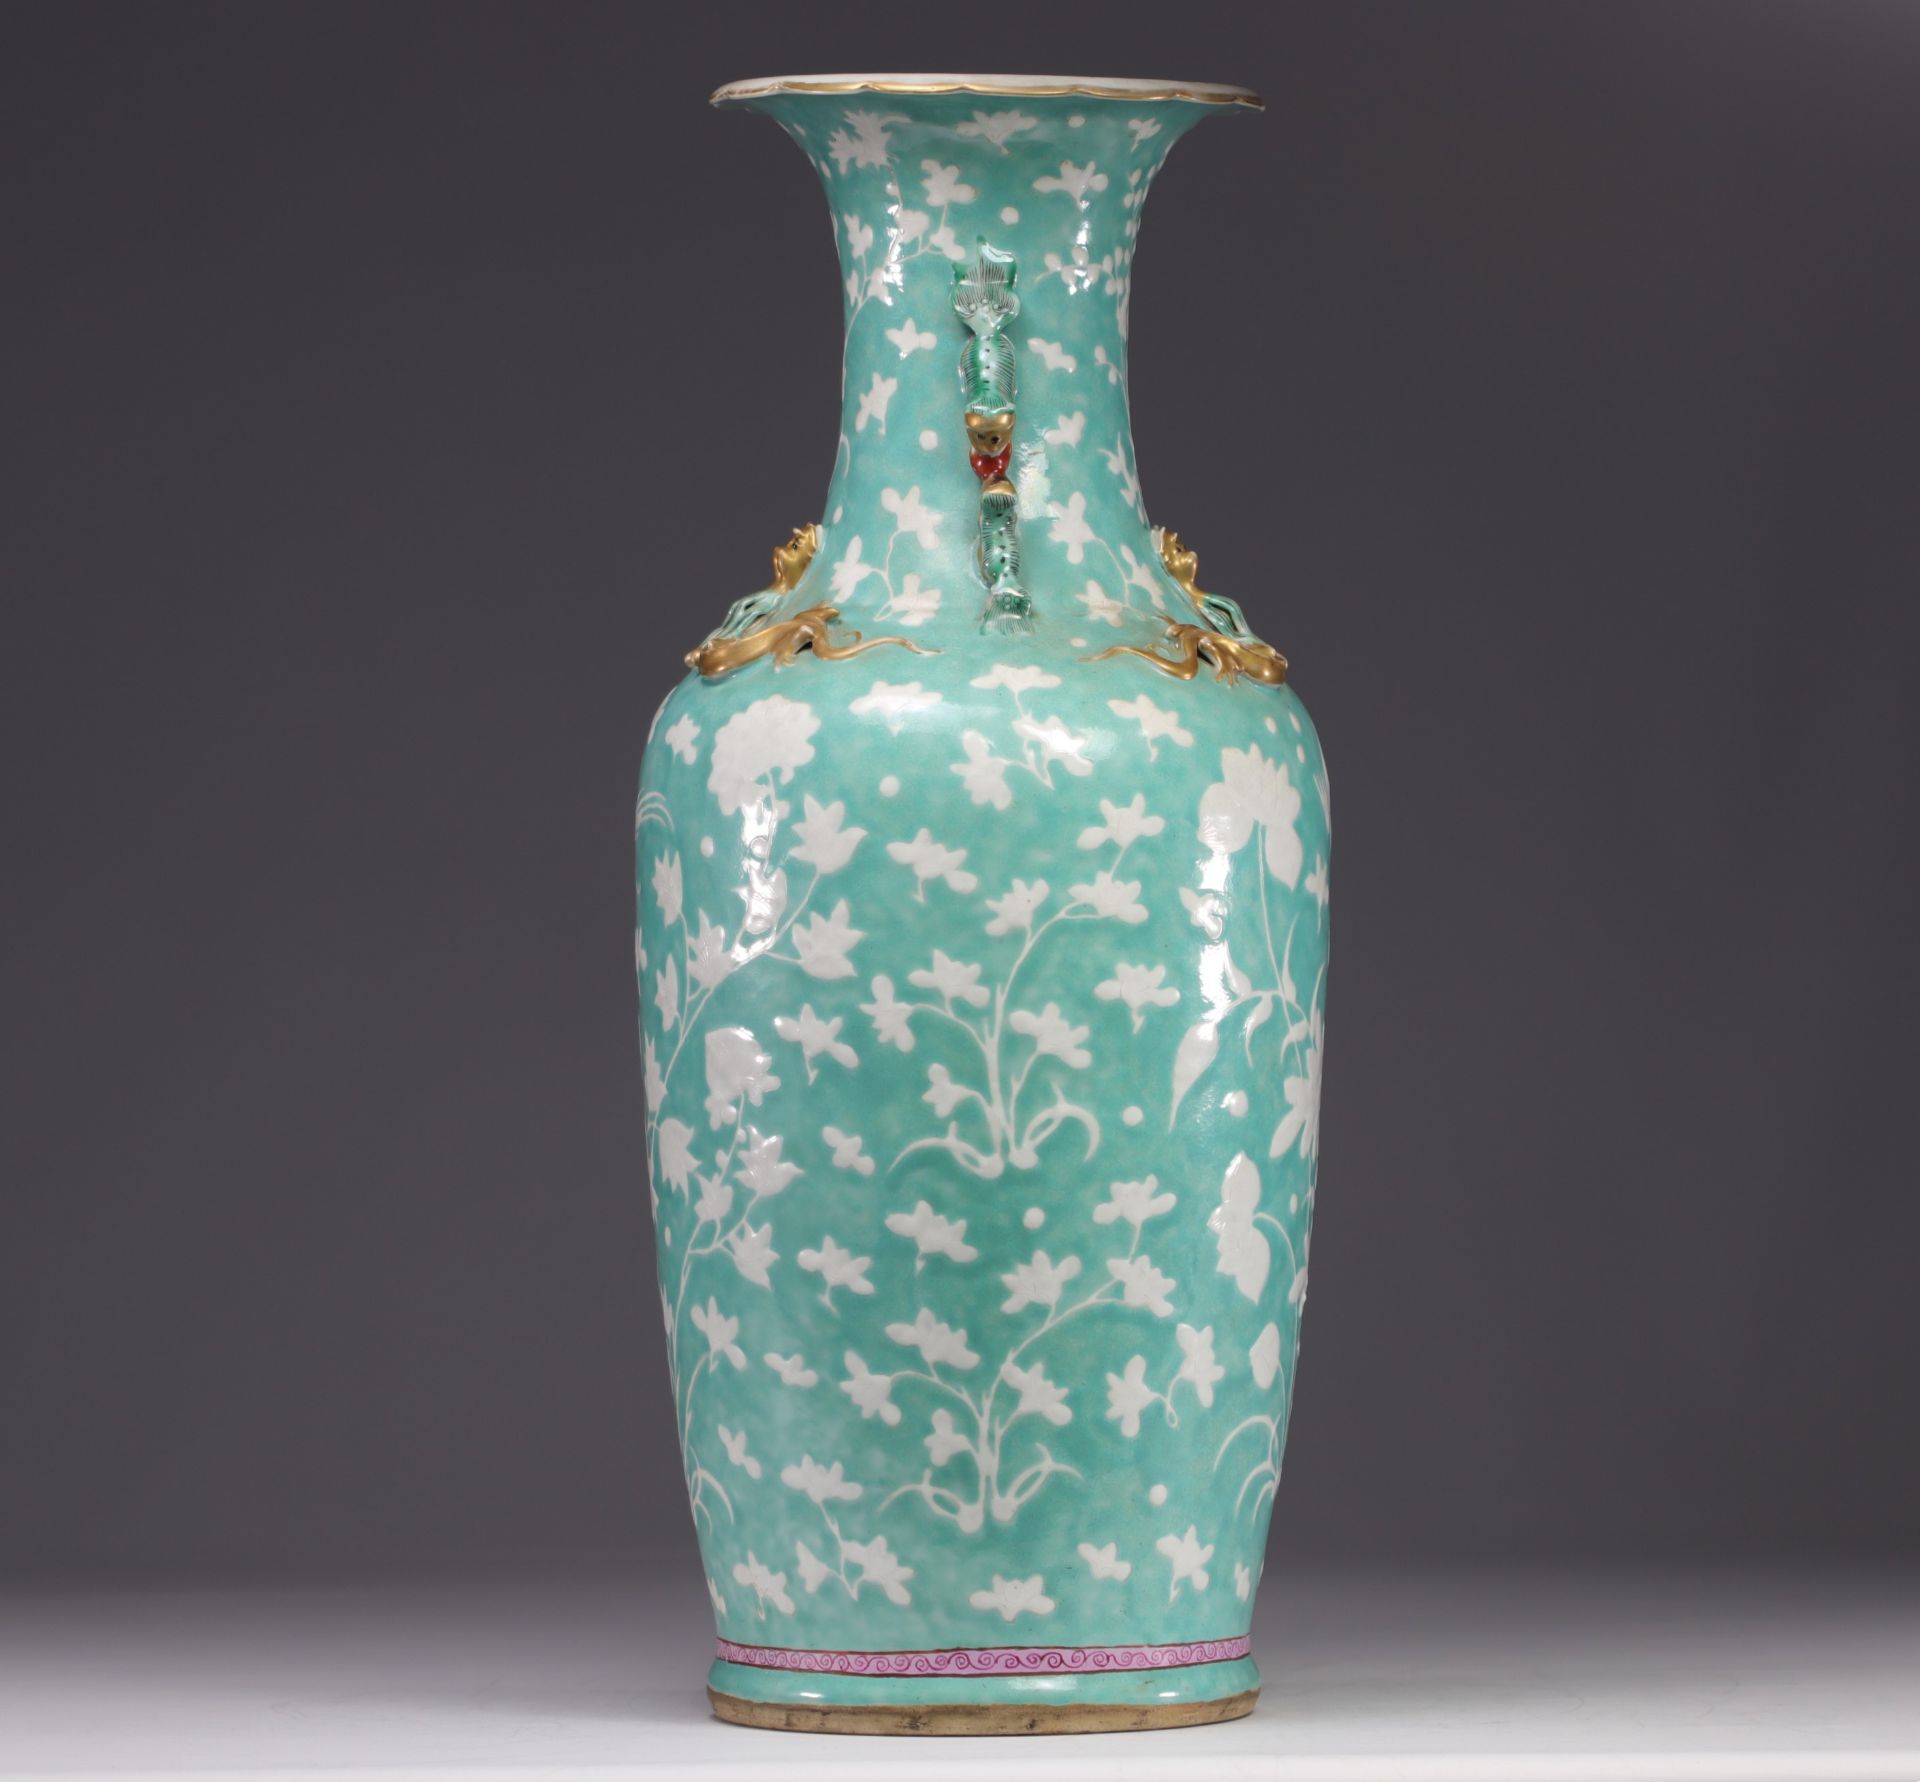 China - large porcelain vase decorated with flowers and birds, turquoise glaze, 19th century. - Image 2 of 6